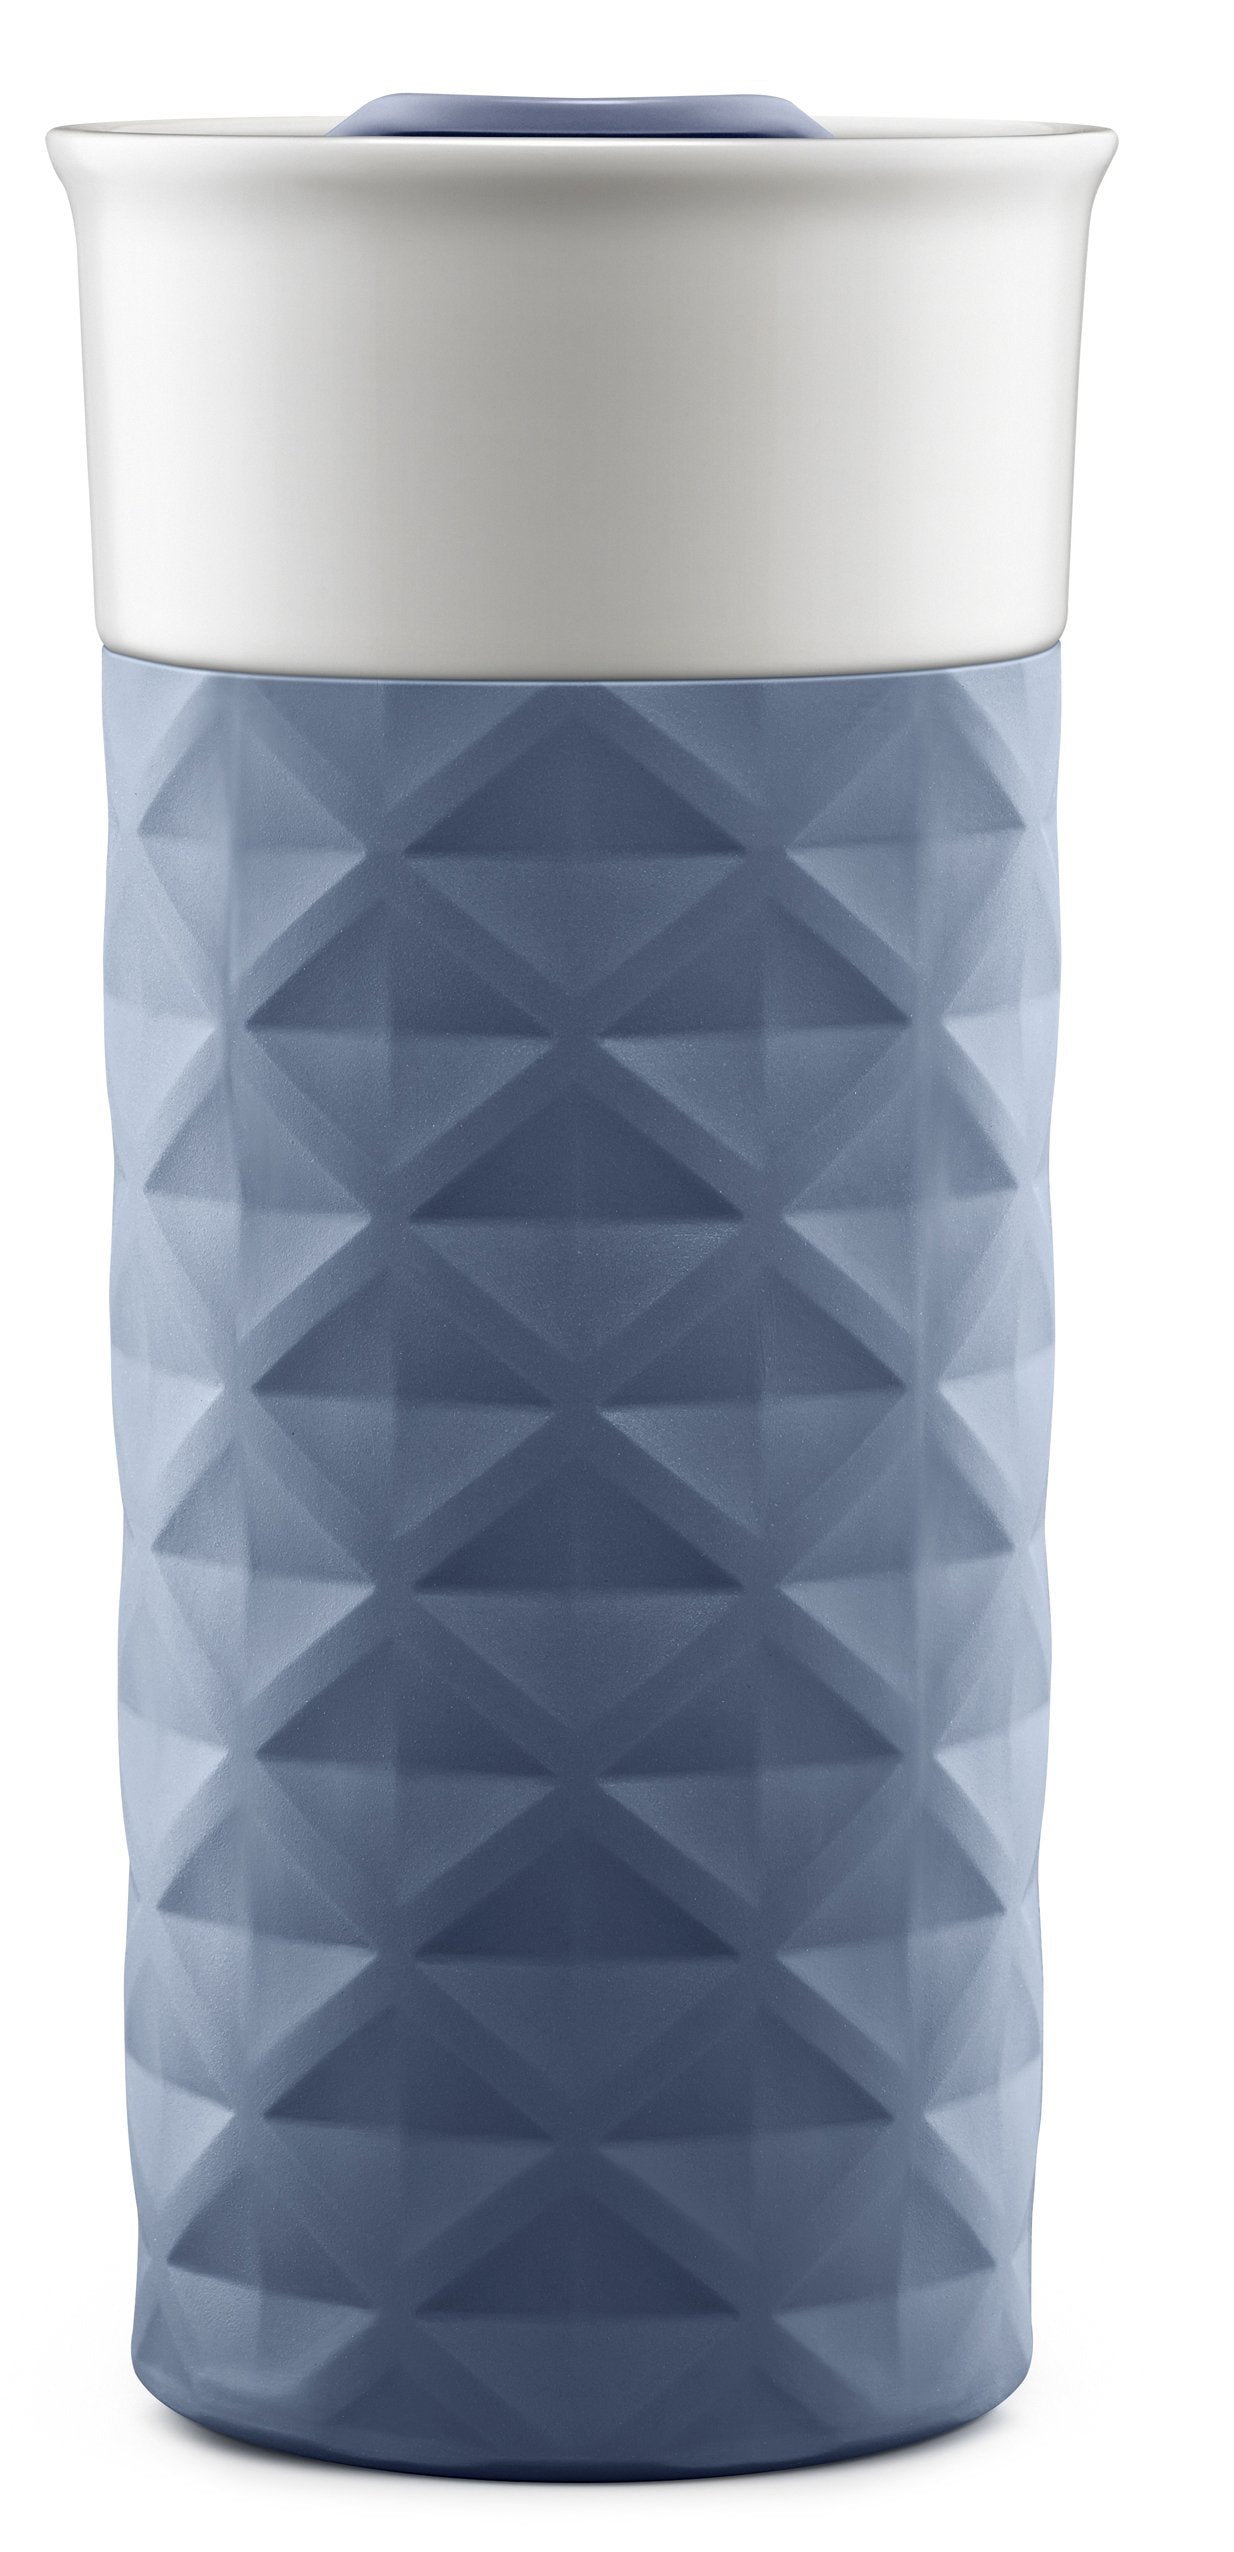 Ello Ogden BPA-Free Ceramic Travel Mug with Lid